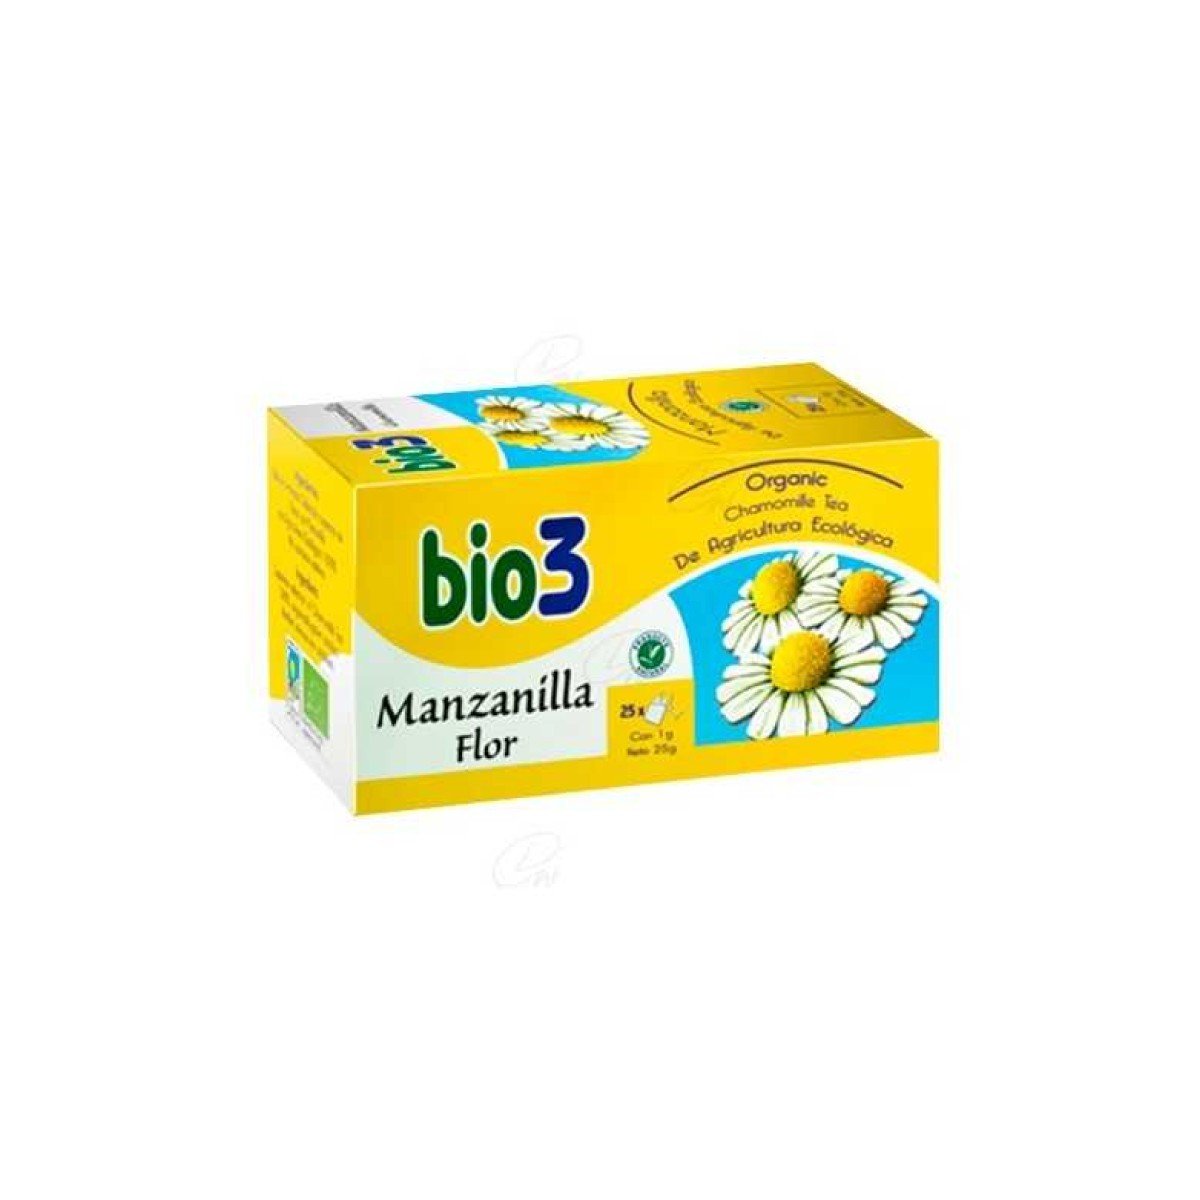 BIO3 manzanilla flor ecológica, 1.5 g, 25 filtros